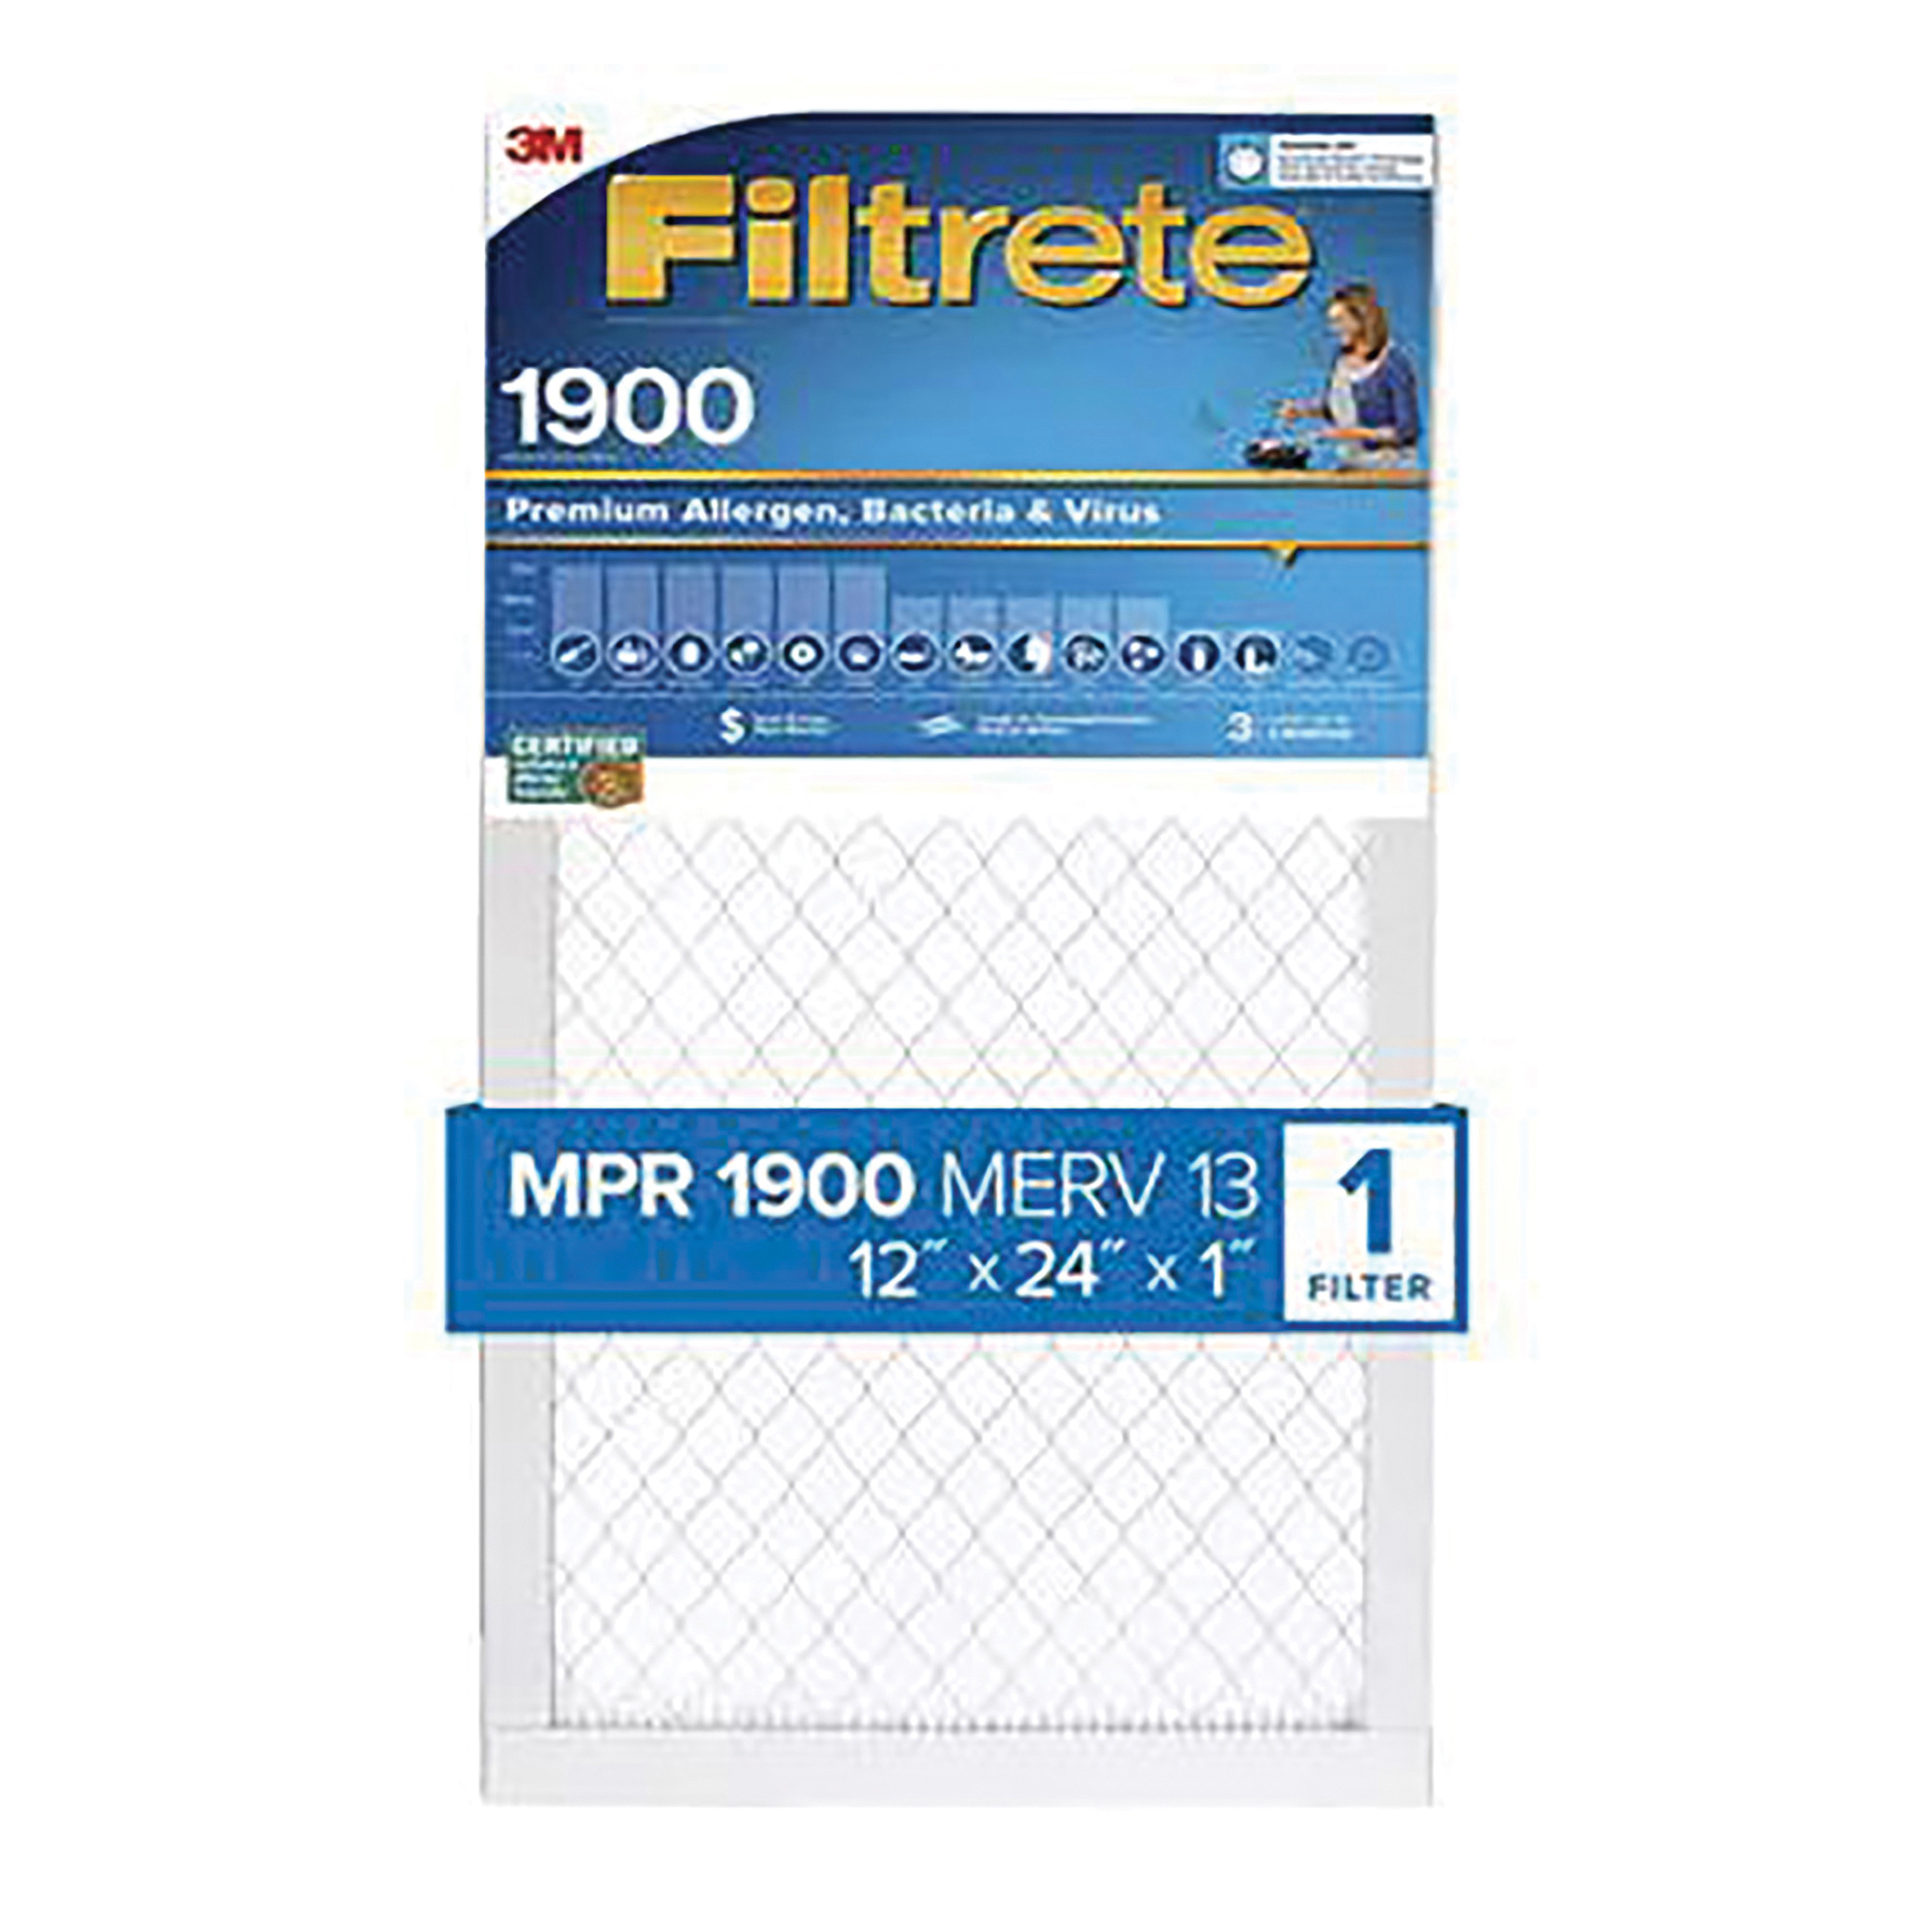 UT20-4 Air Filter, 24 x 12 x 1, 13 MERV, 1900 MPR